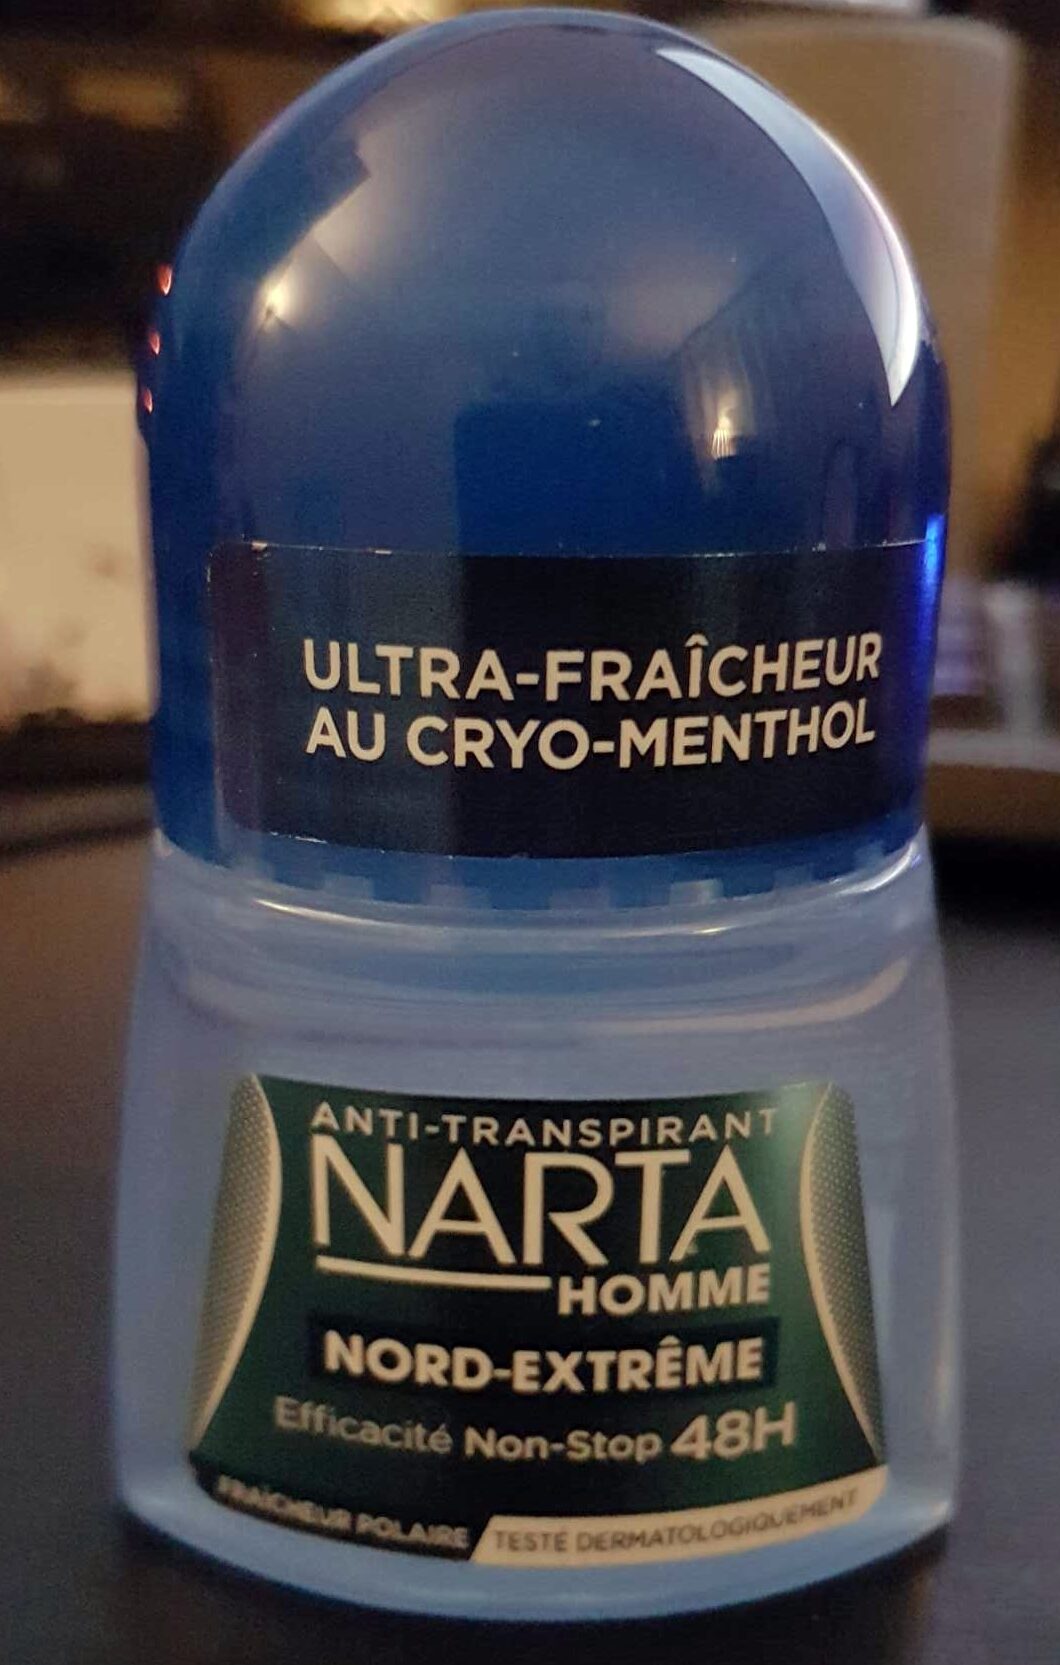 Antitranspirant Narta Homme Nord-Extrême - Product - fr